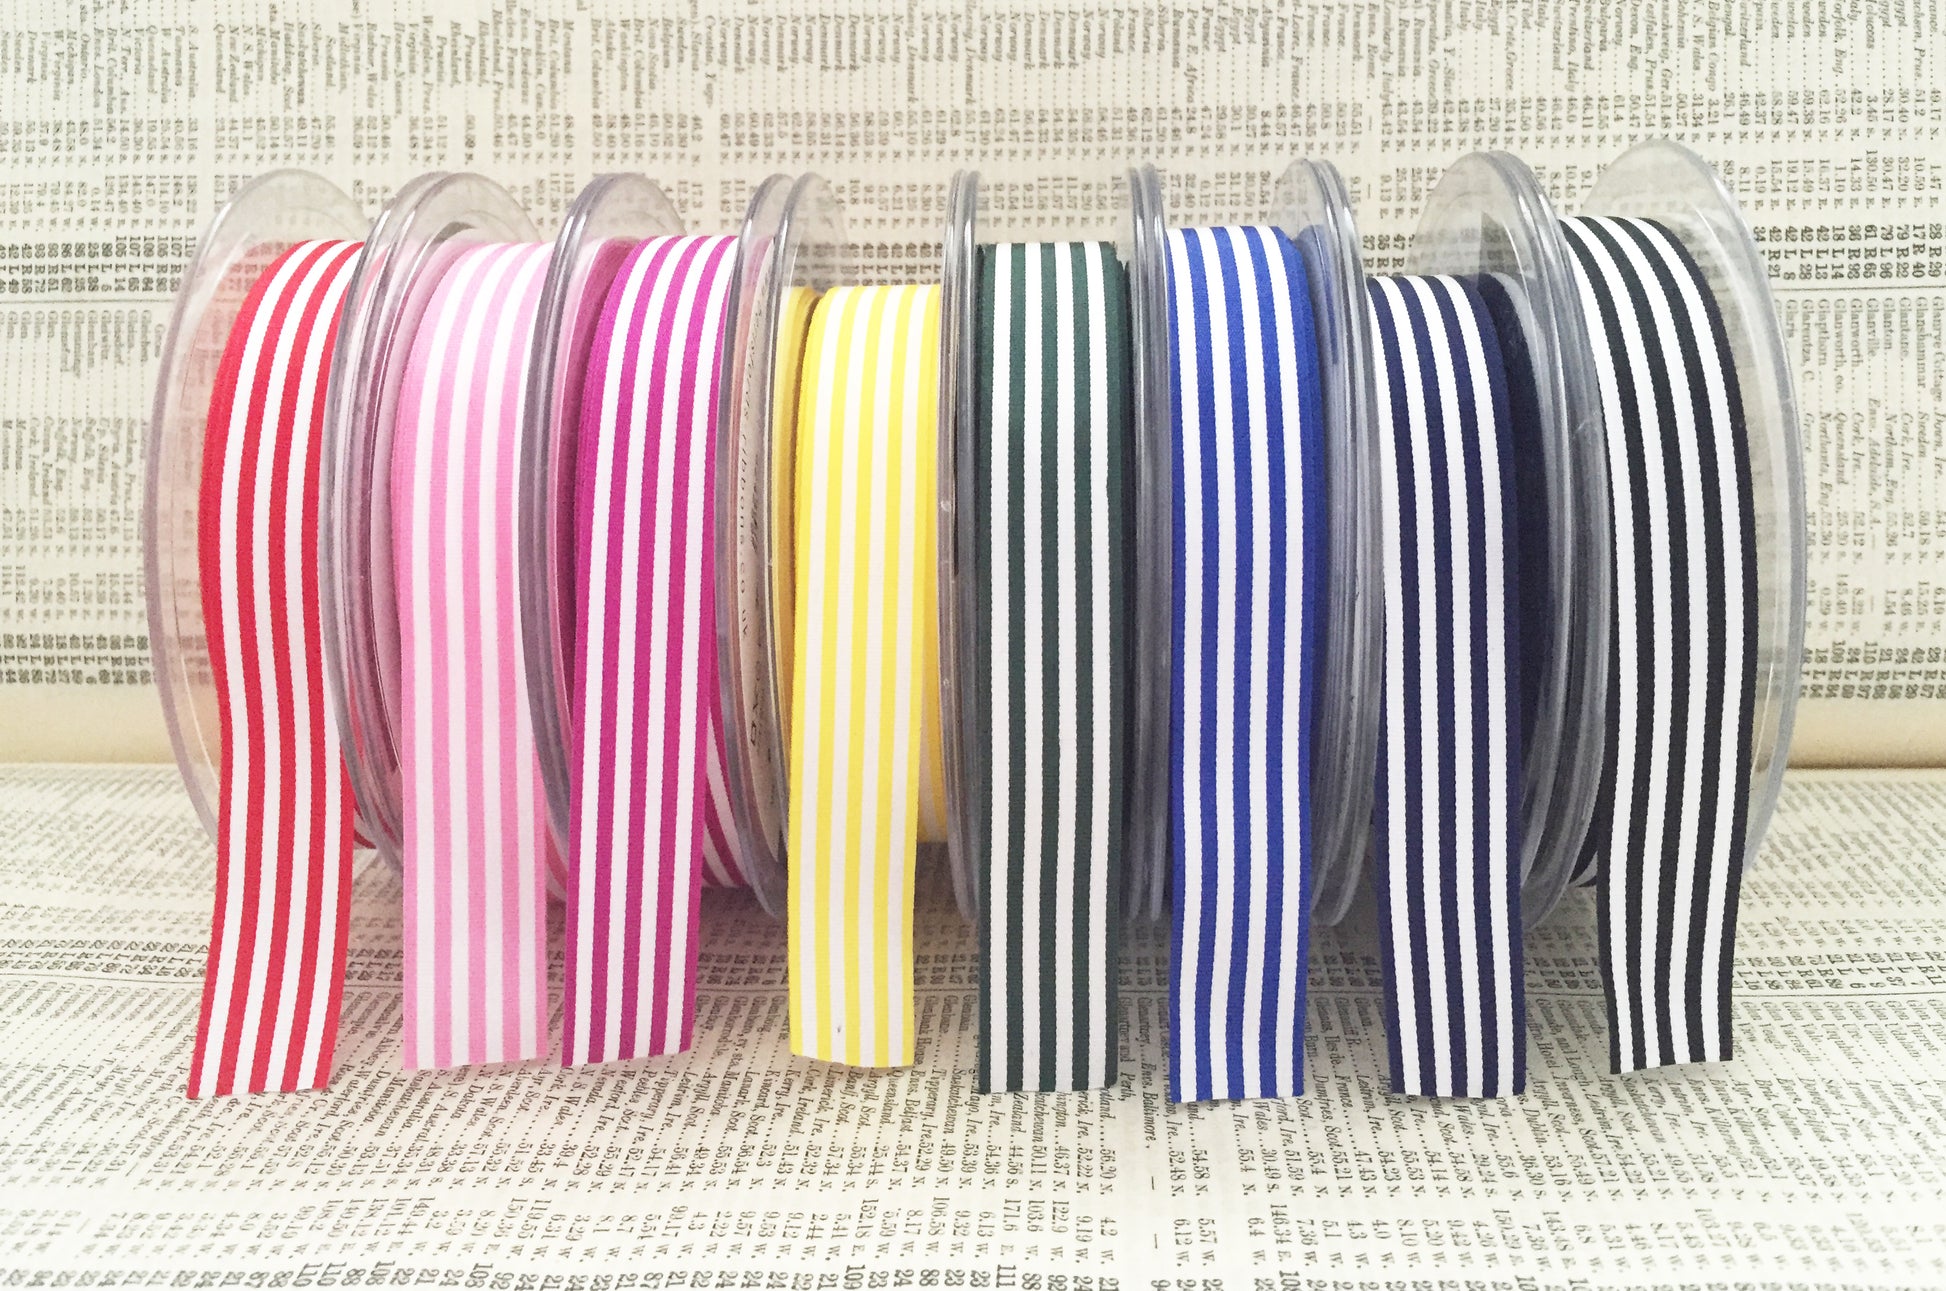 Green & White Stripe Ribbon 3 Widths 9mm 16mm 25mm | Choose Length or Full Roll - SweetpeaStore